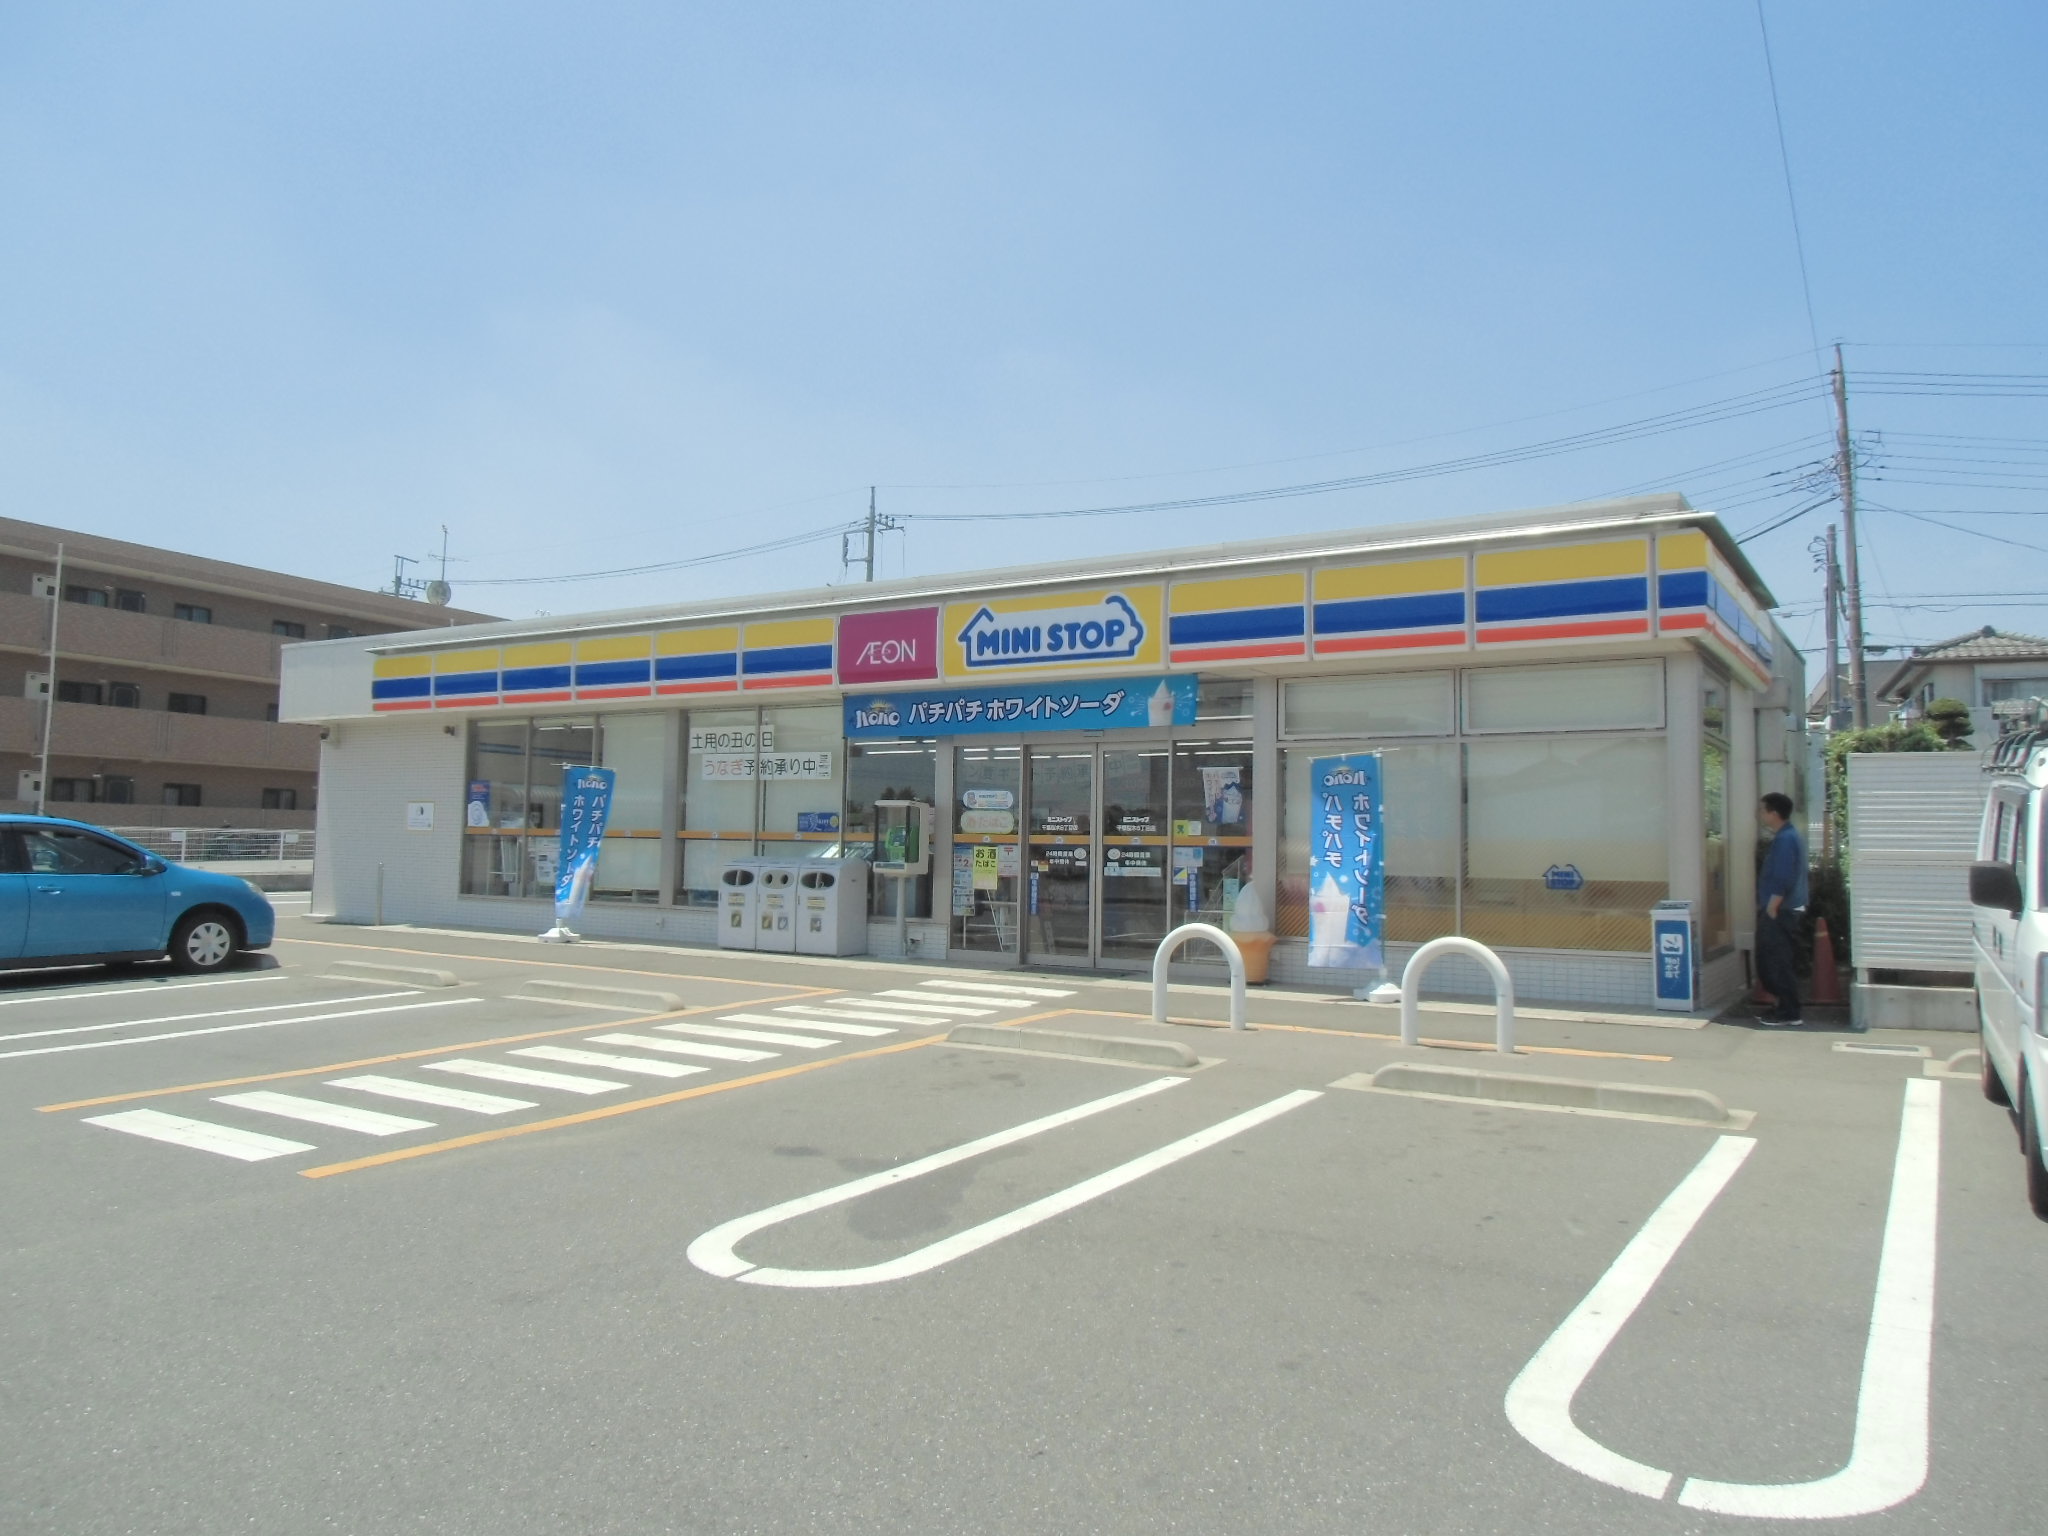 Convenience store. MINISTOP Chiba Sakuragi 6-chome up (convenience store) 398m